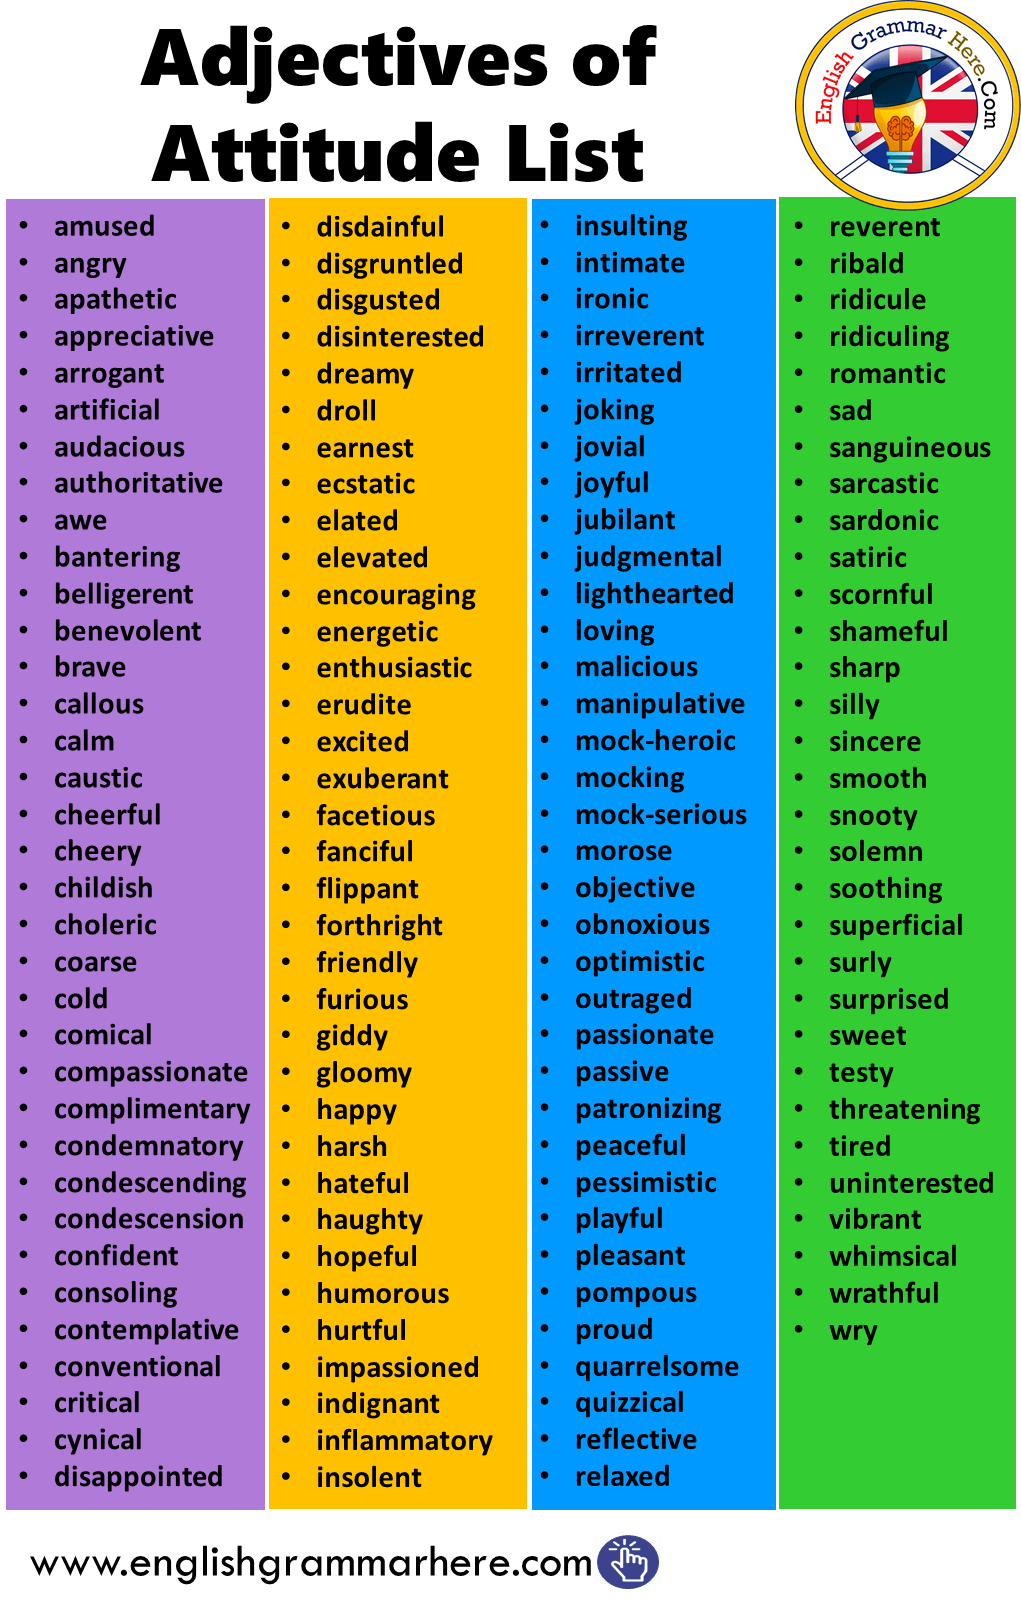 English Adjectives of Attitude List